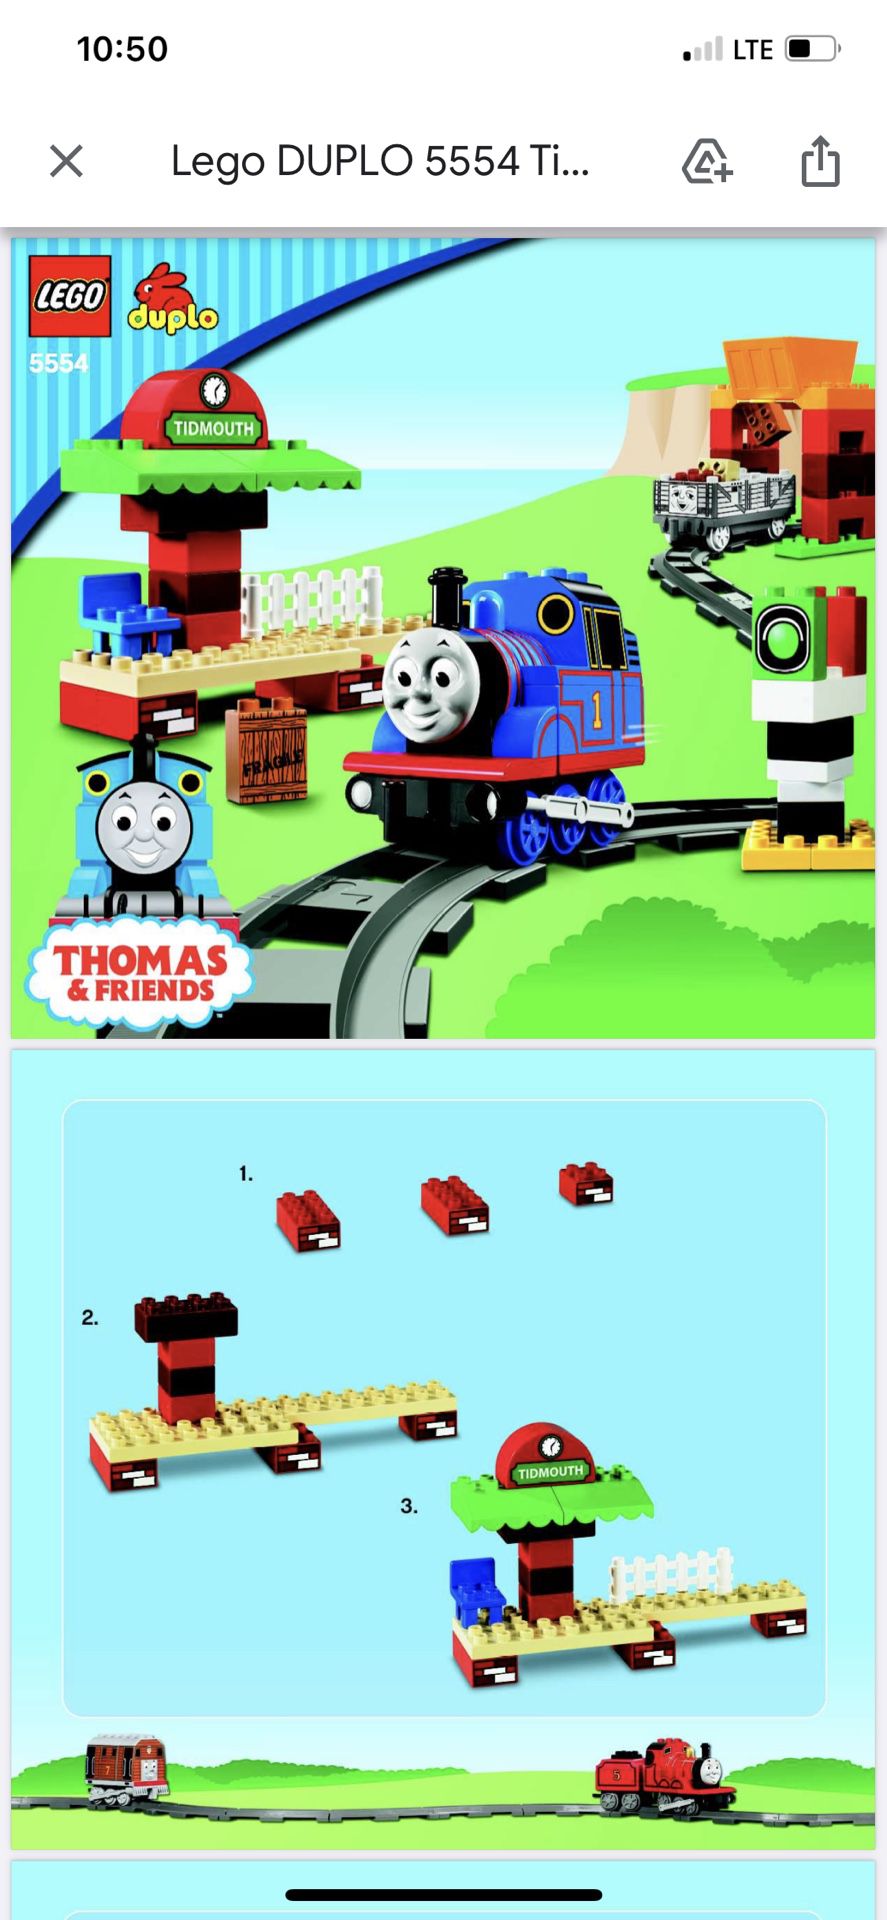 Thomas & Friends LEGO DUPLO 5554 Tidmouth Station